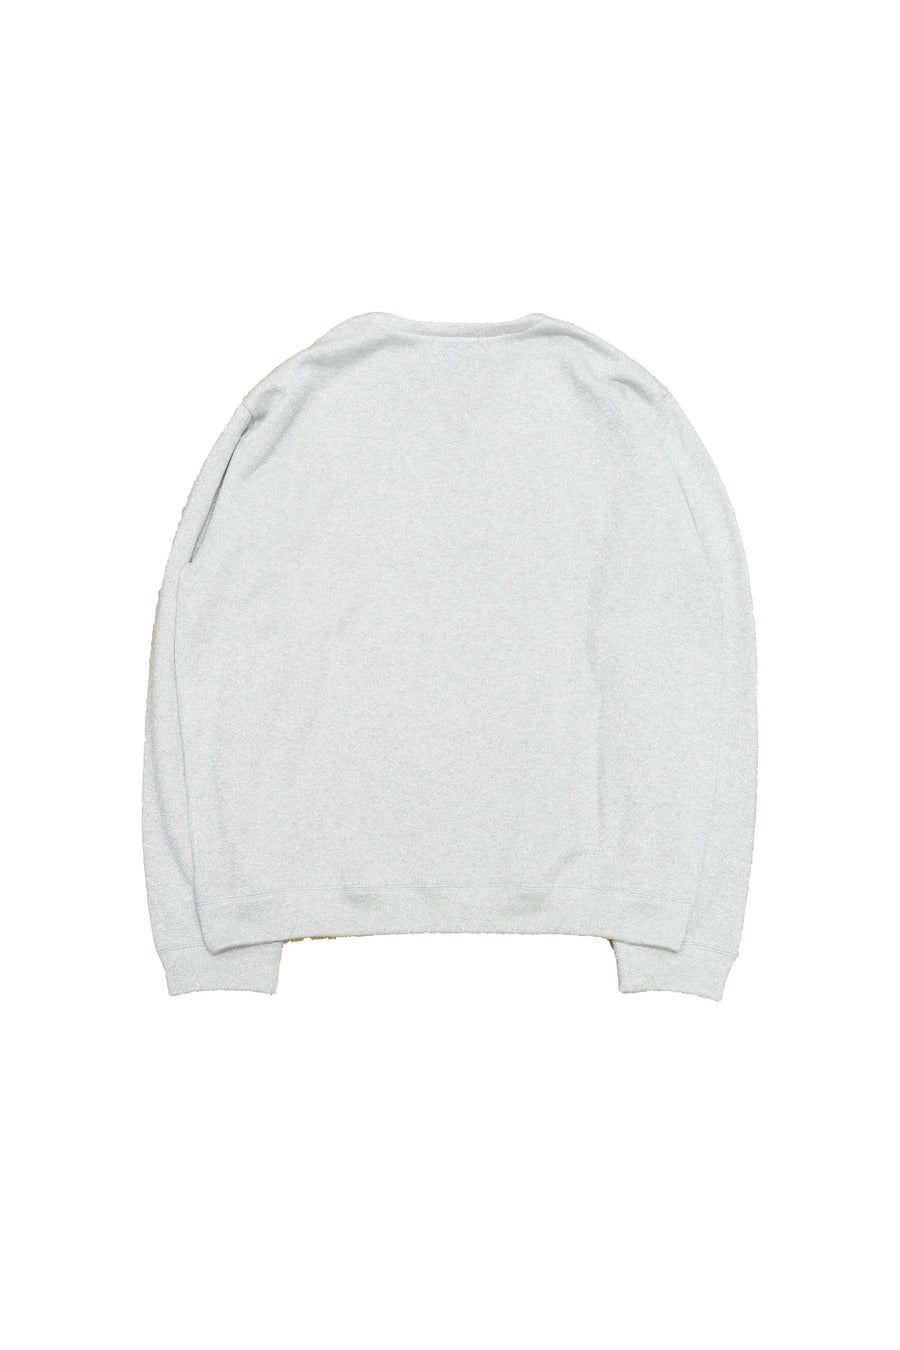 Taiga Igari  Pixie Dust Sweat Shirt(Light Grey / Silver)